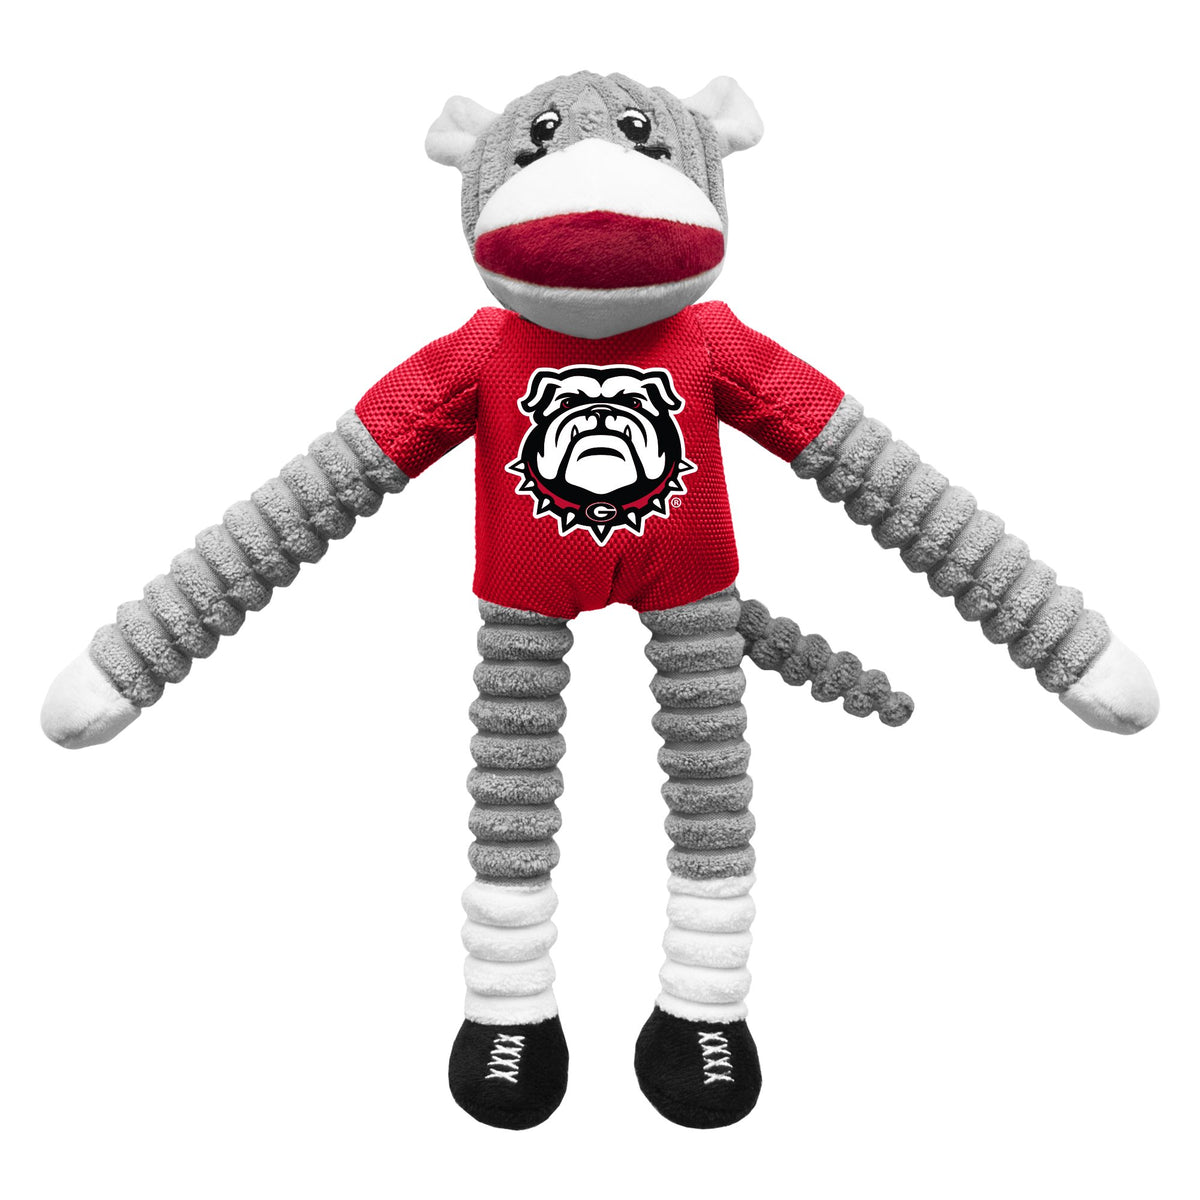 GA Bulldogs Sock Monkey Toy - 3 Red Rovers